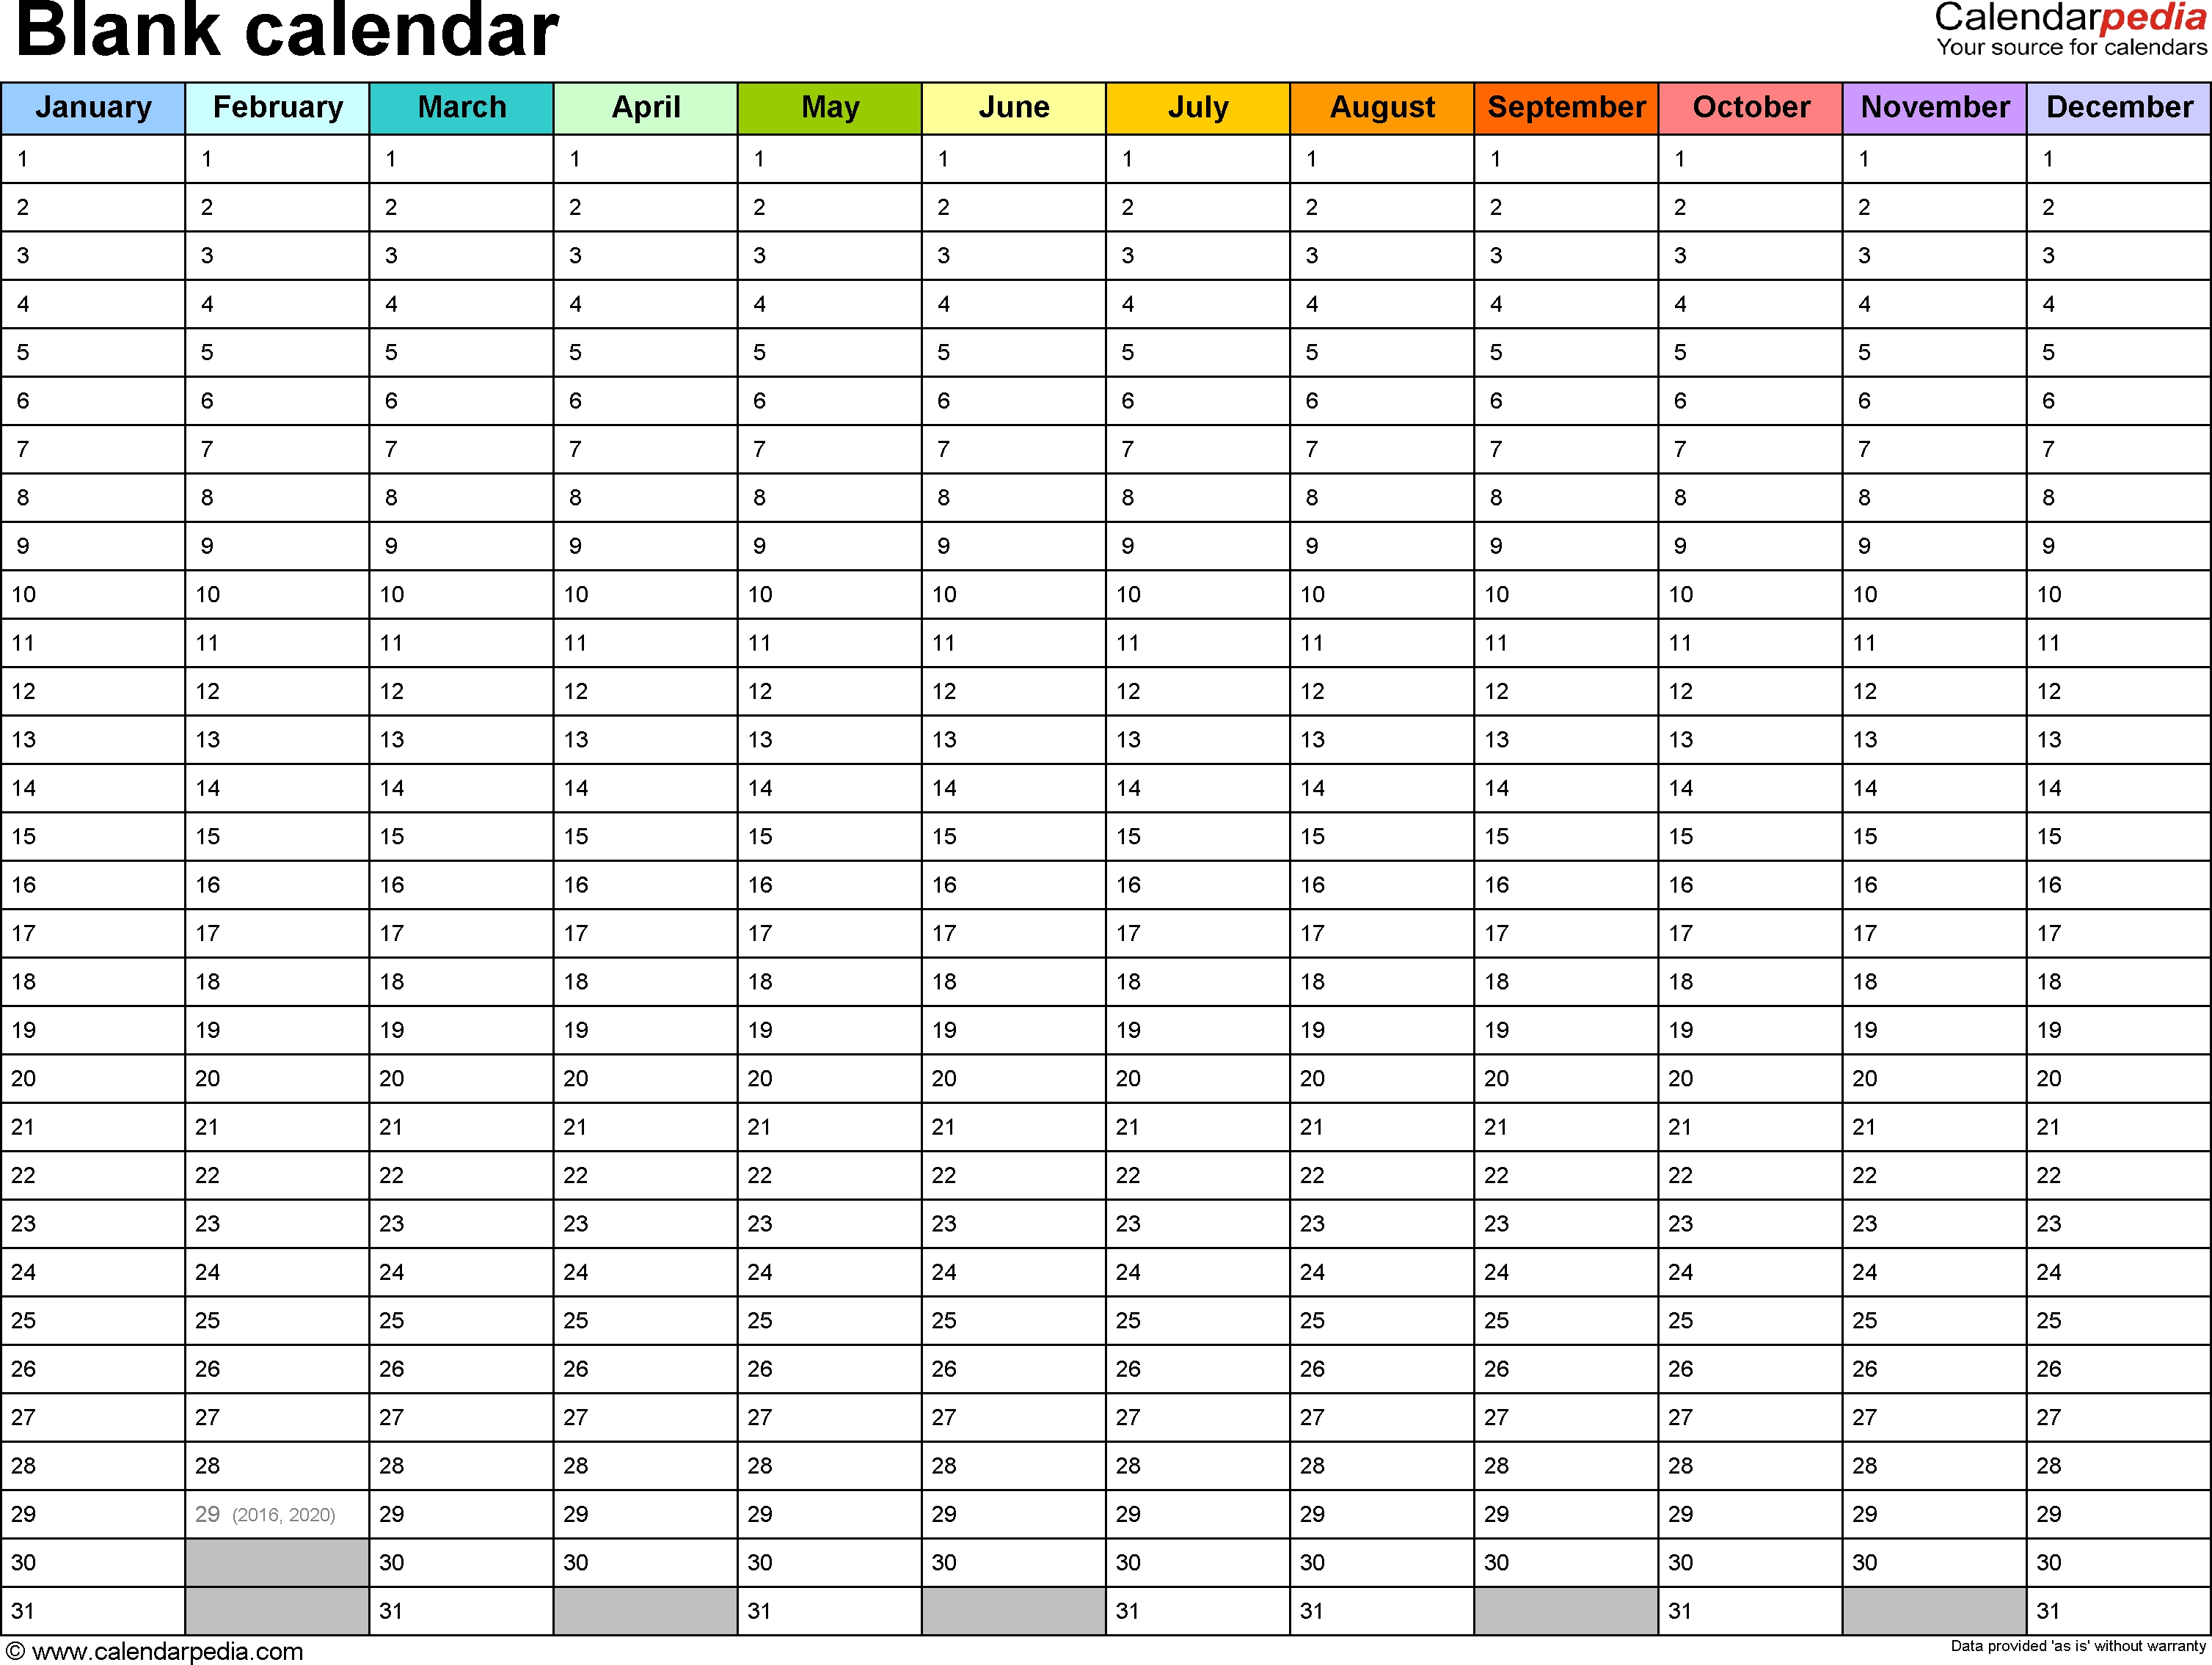 Blank Calendar - 9 Free Printable Microsoft Word Templates pertaining to Free Printable 3 Month Calendar